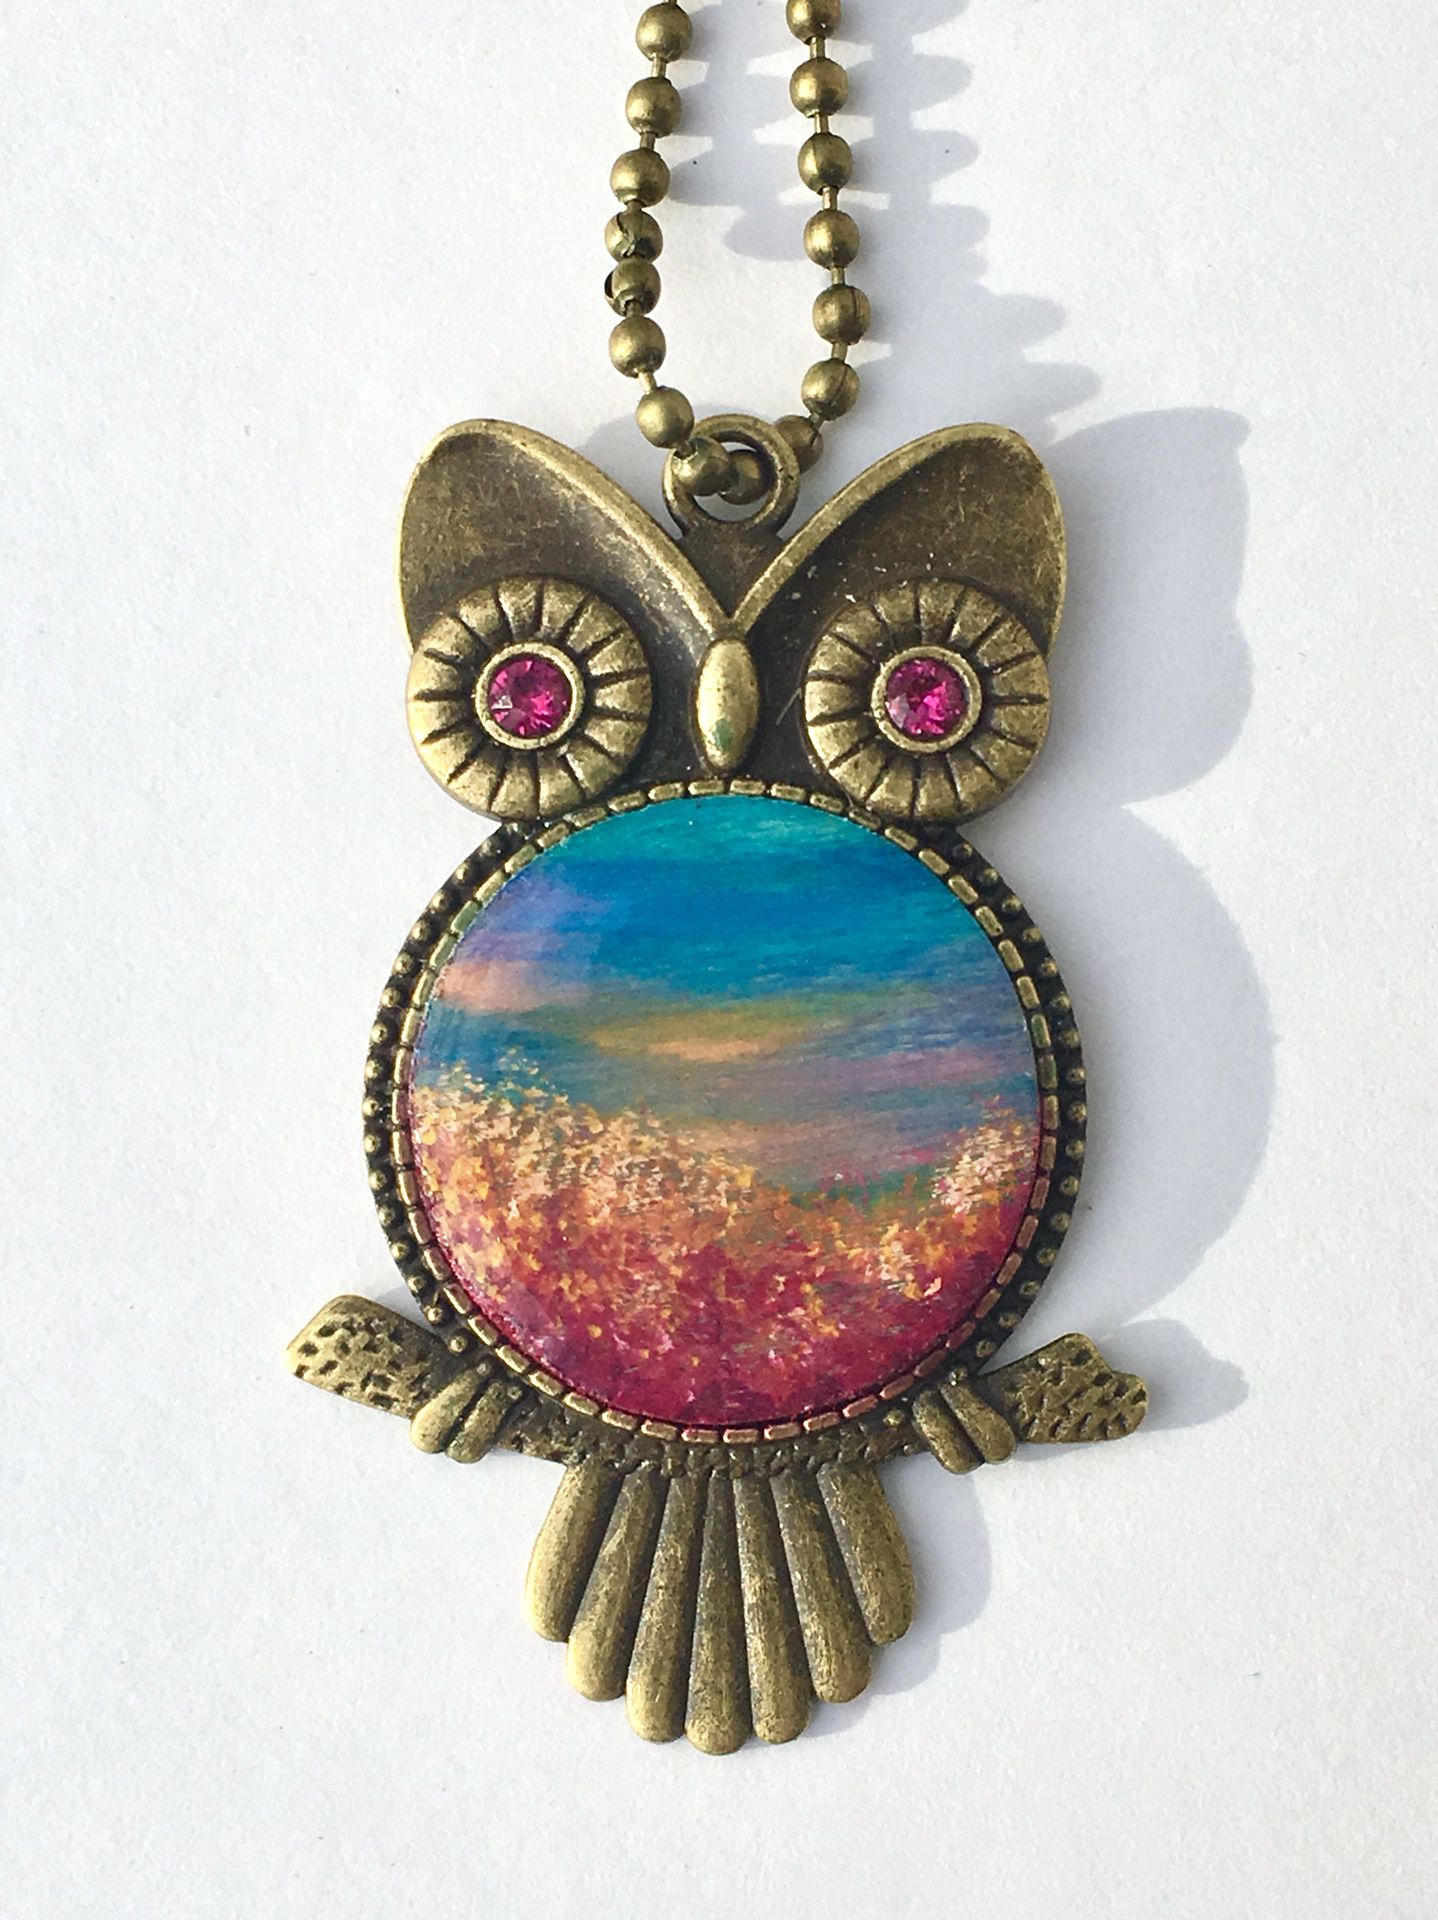 Handmade bronze owl necklace